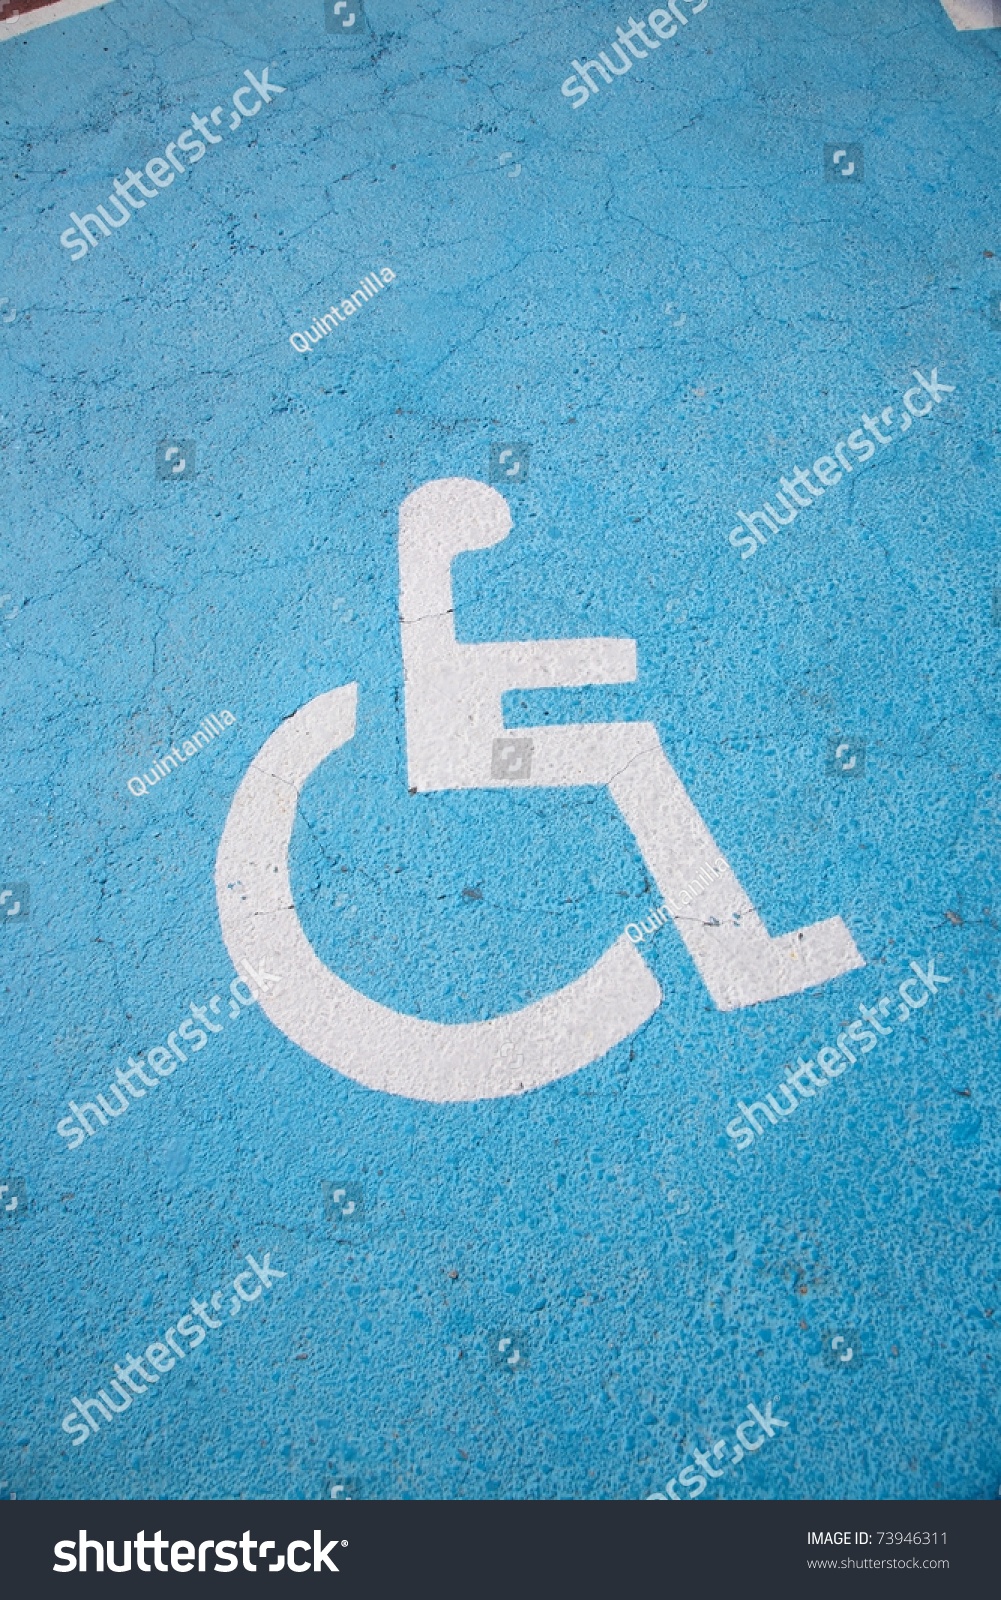 only handicapped parking sign on the asphalt ground #73946311